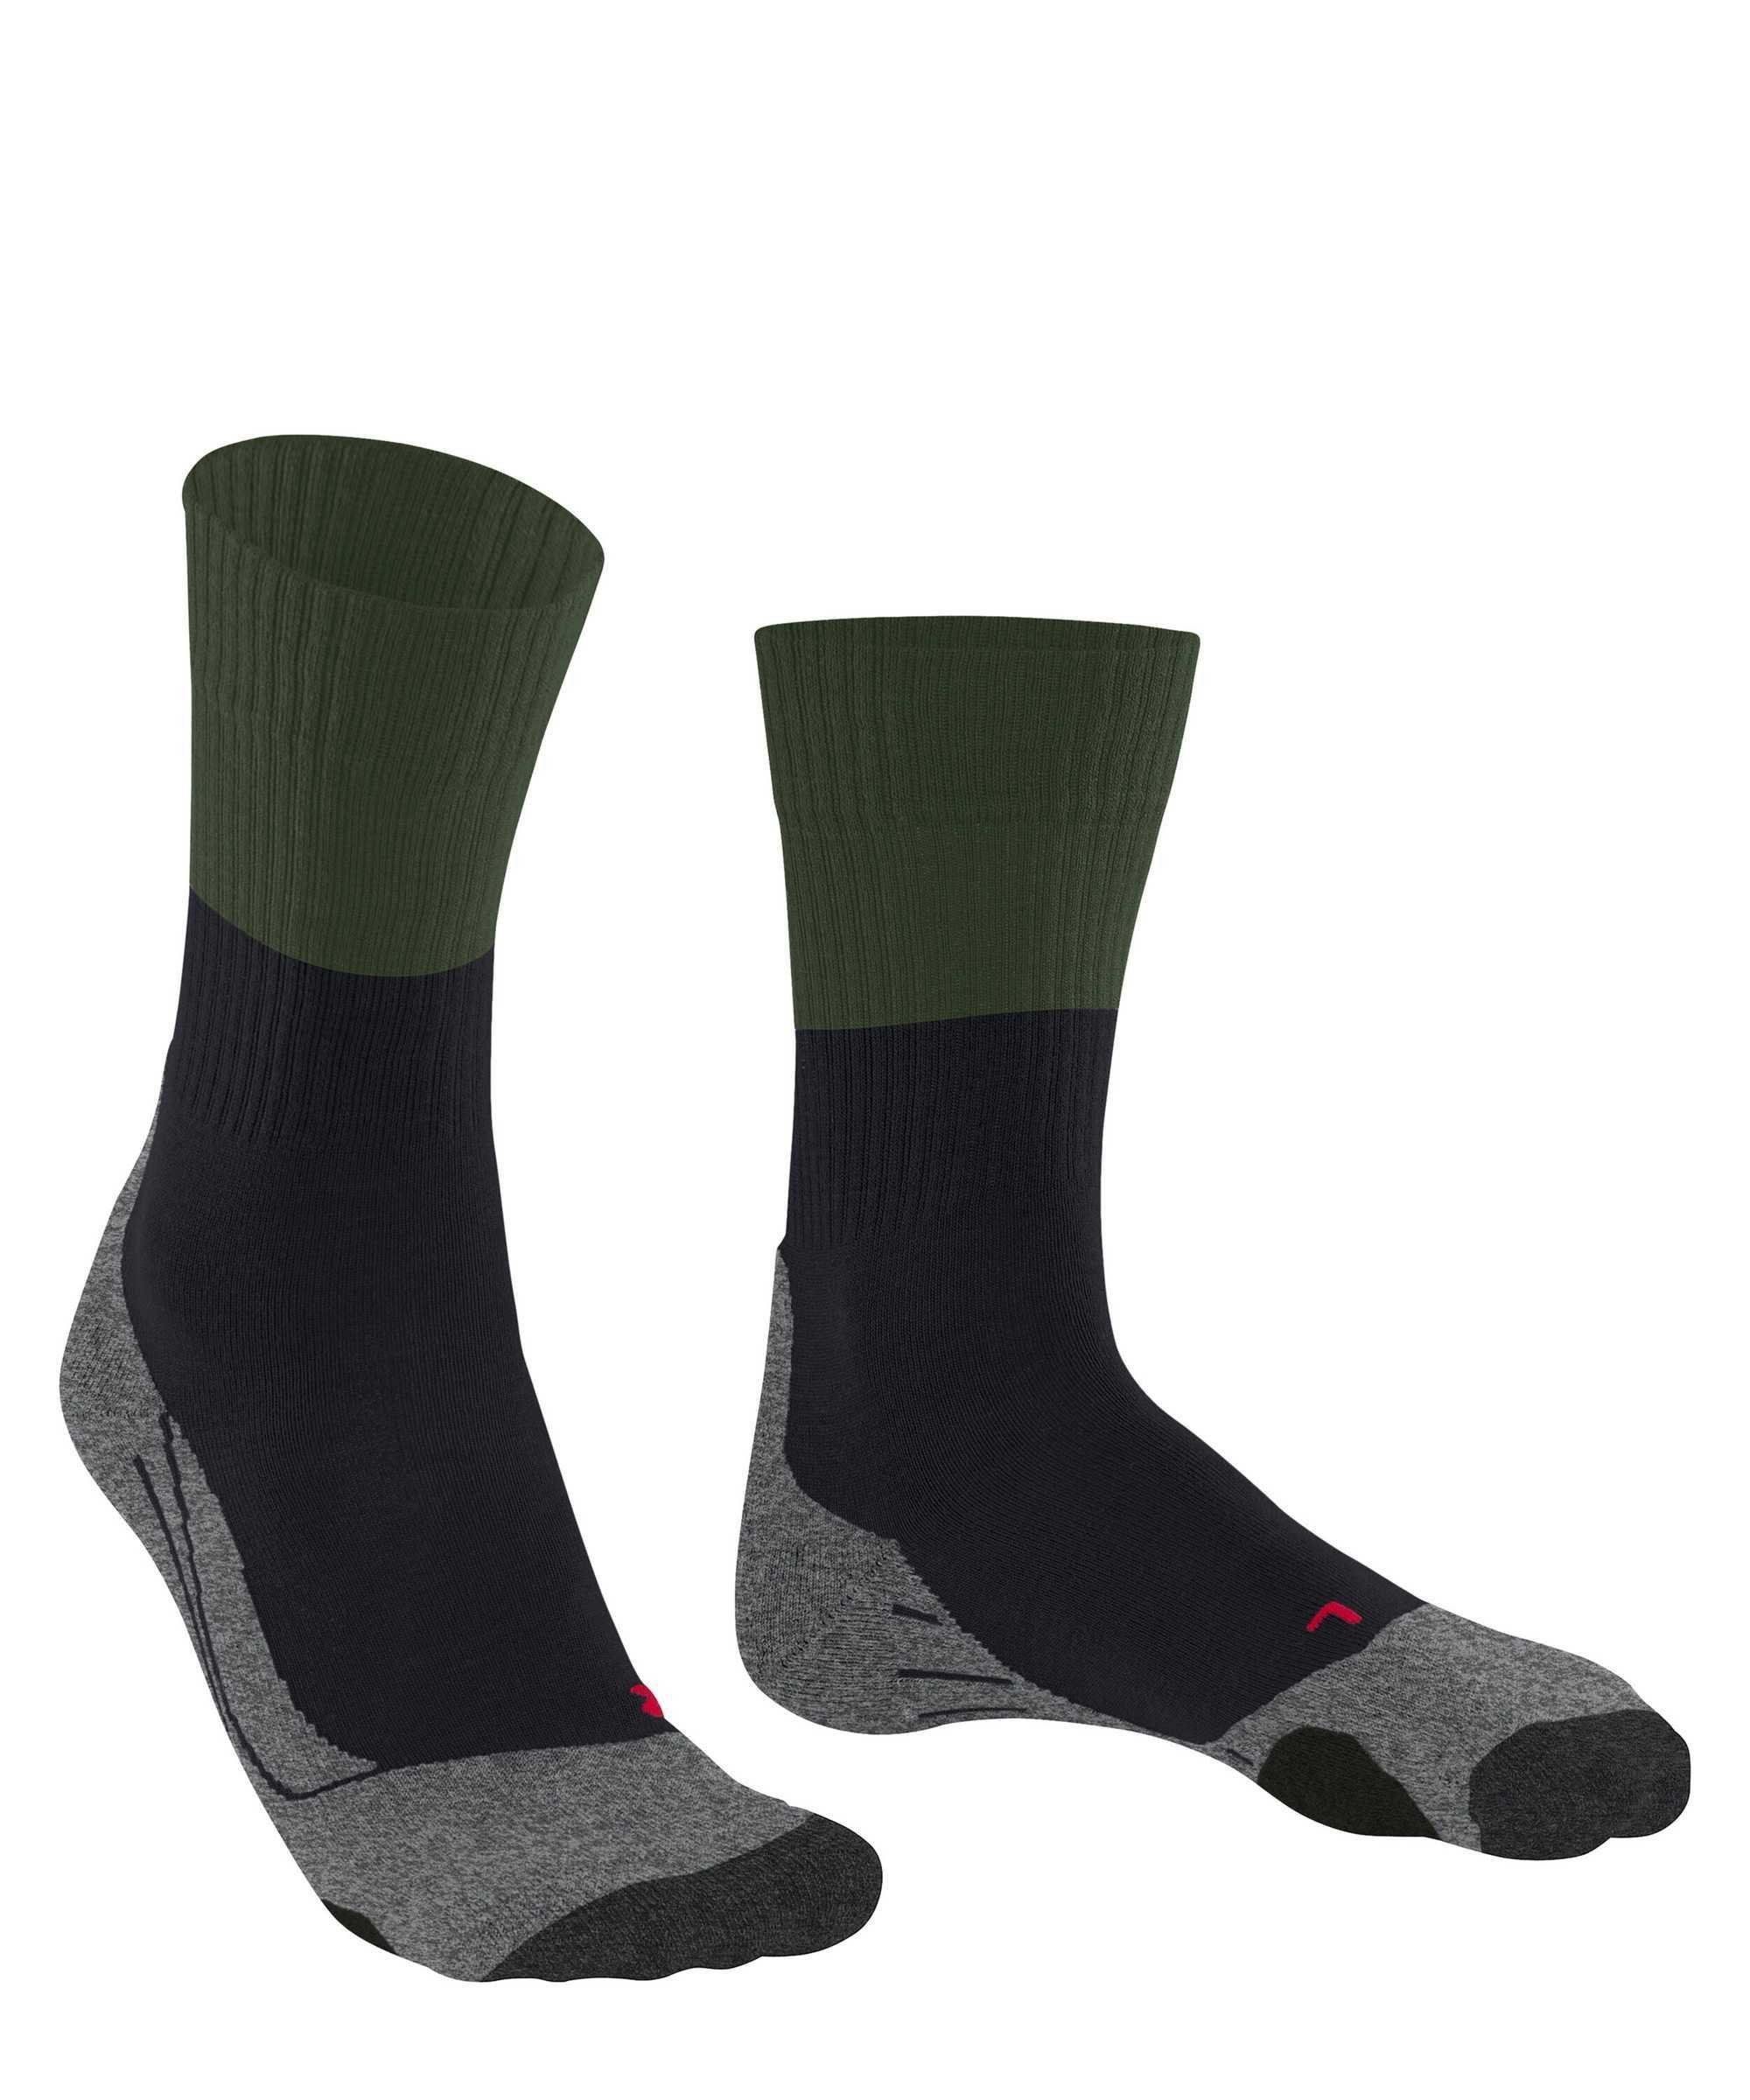 Herren (Vertigo) - Sportsocken TK2, Trekking Socken Polsterung Schwarz/Grau/Grün FALKE Socken